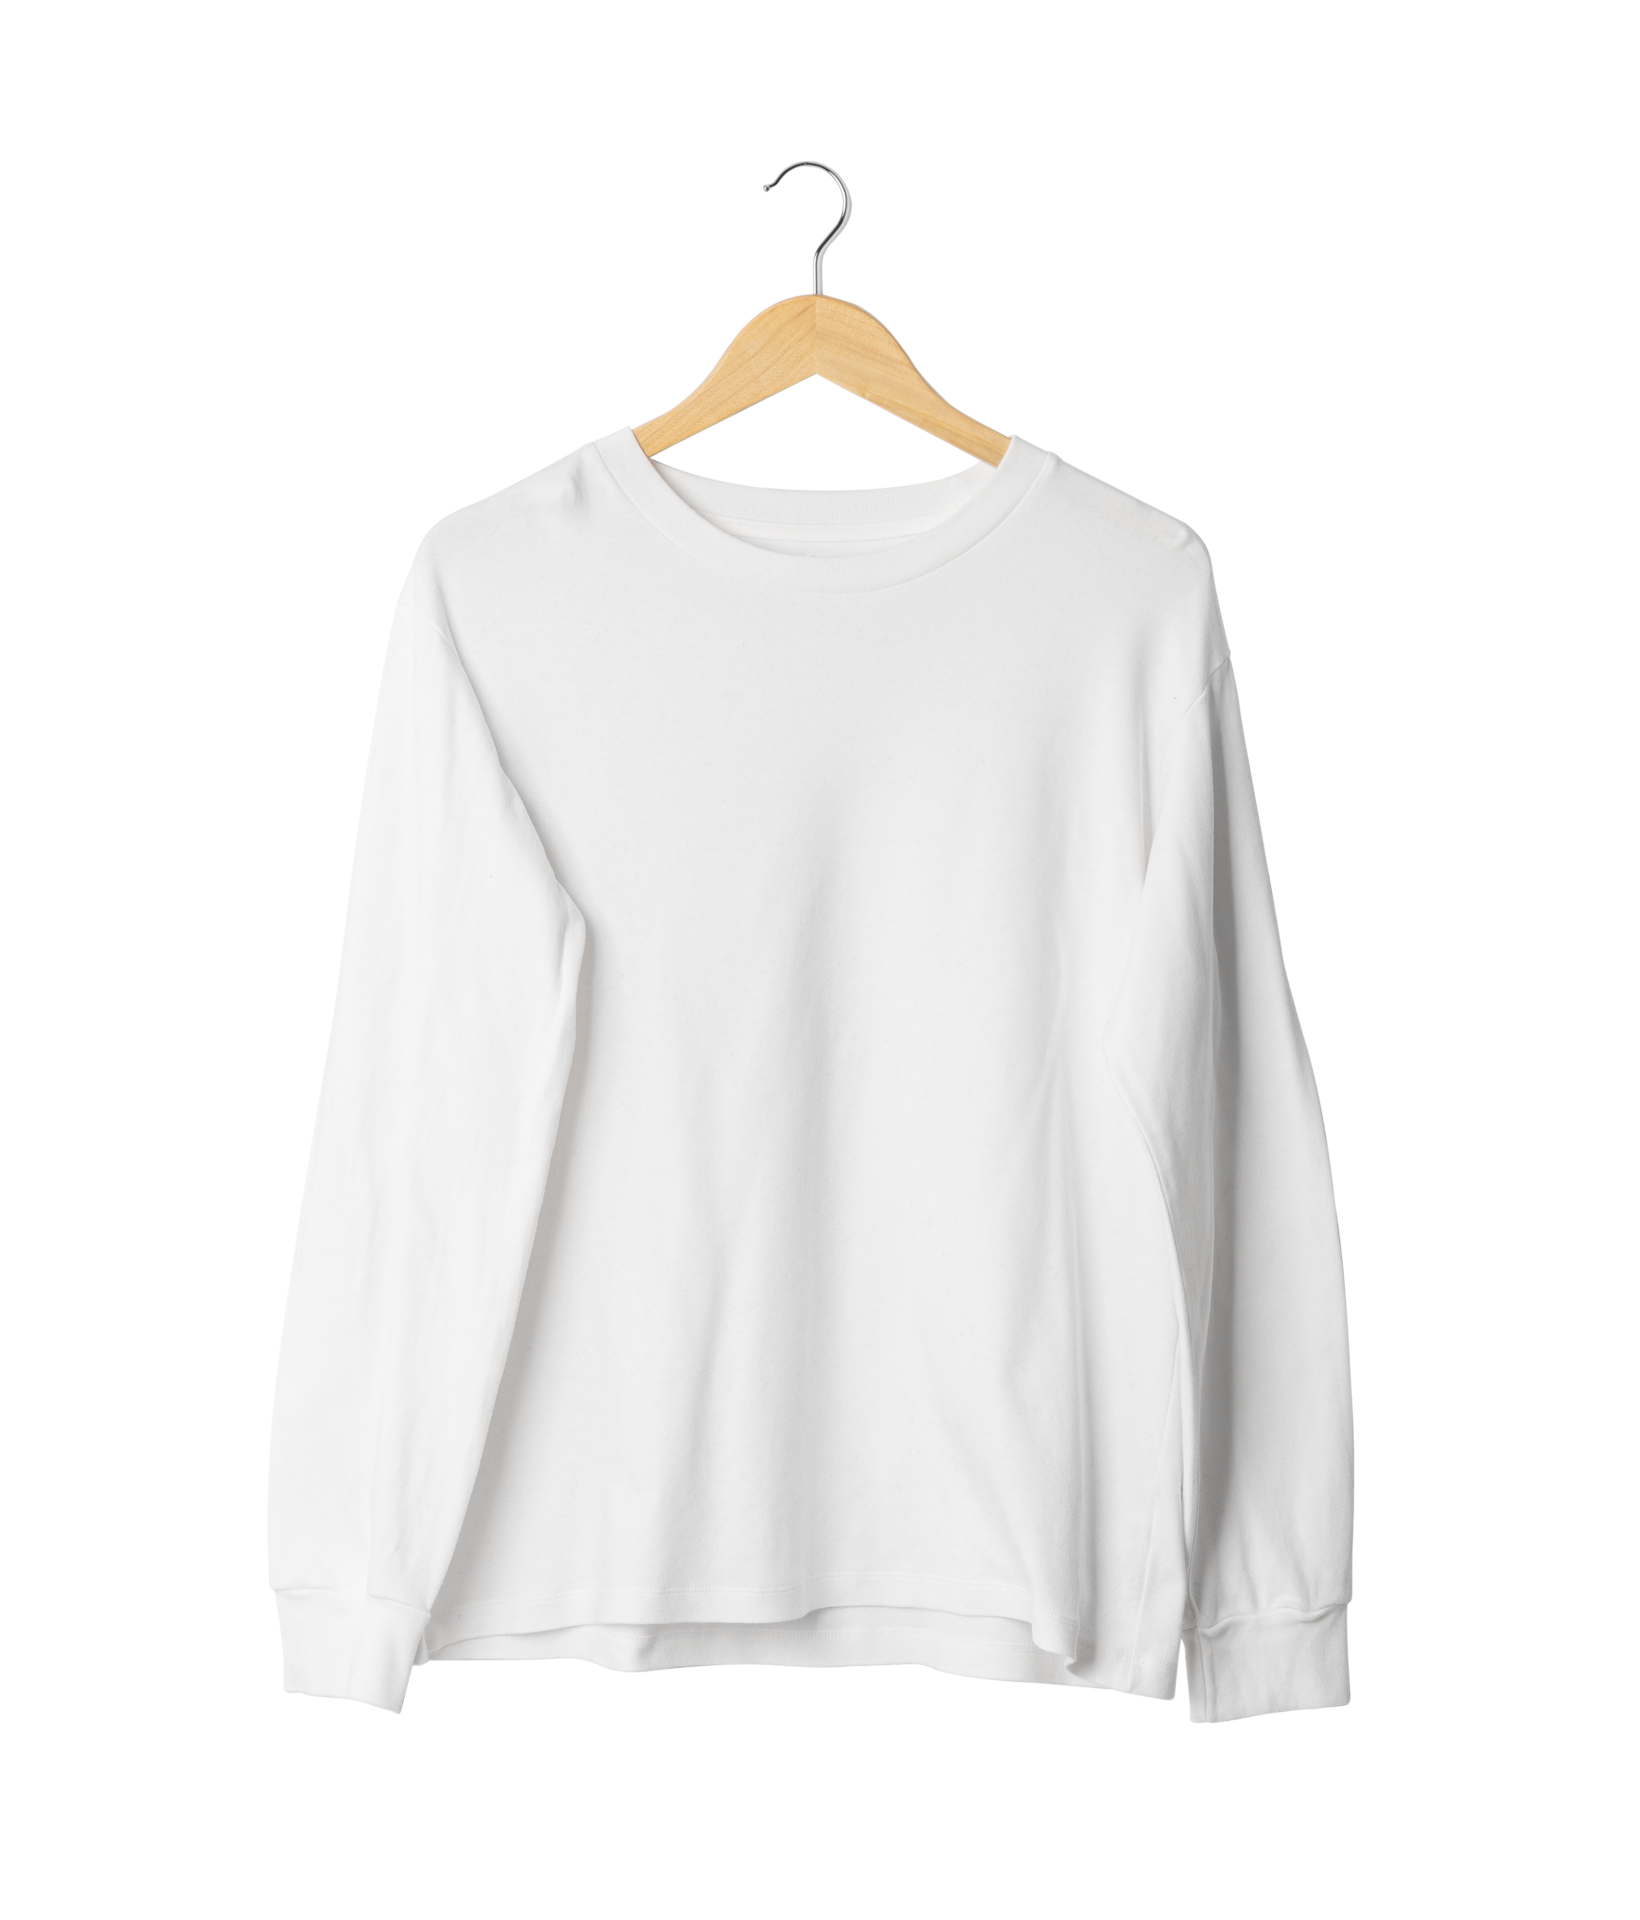 White sweatshirt mockup 8520127 PNG Png Transparent Overlay